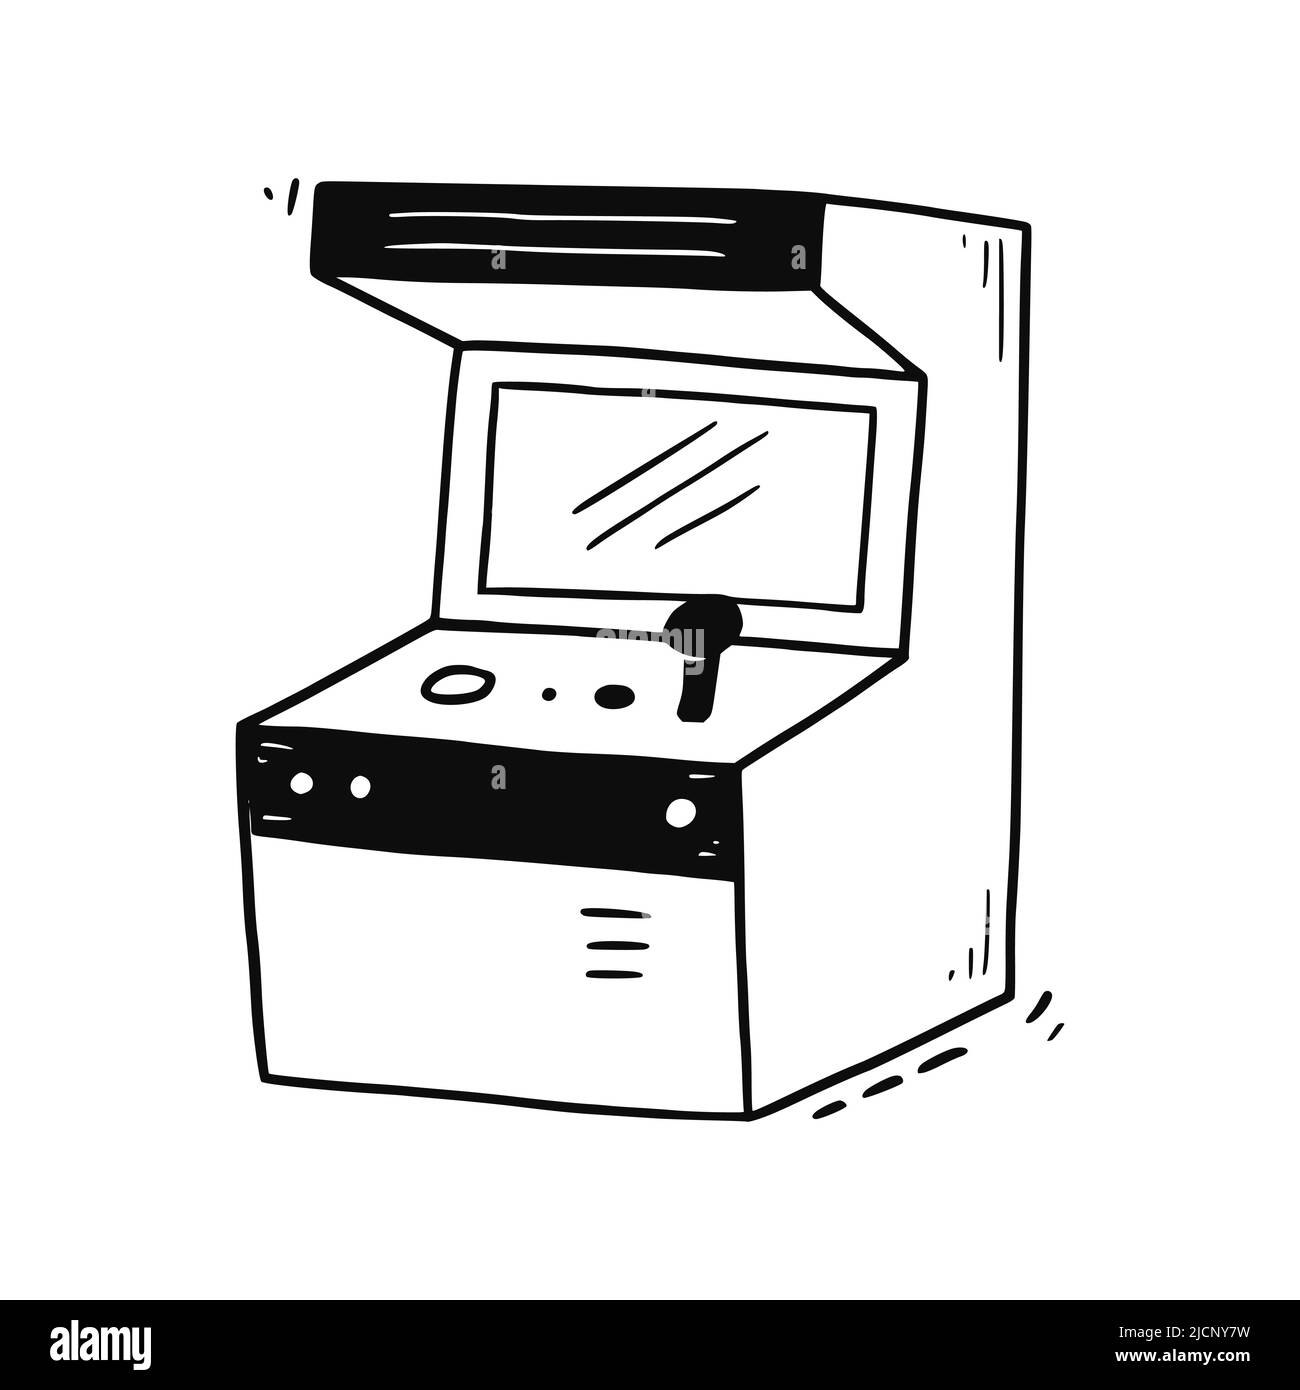 Video game arcade machine. Retro game control. Vector illustration isolated. Stock Vector